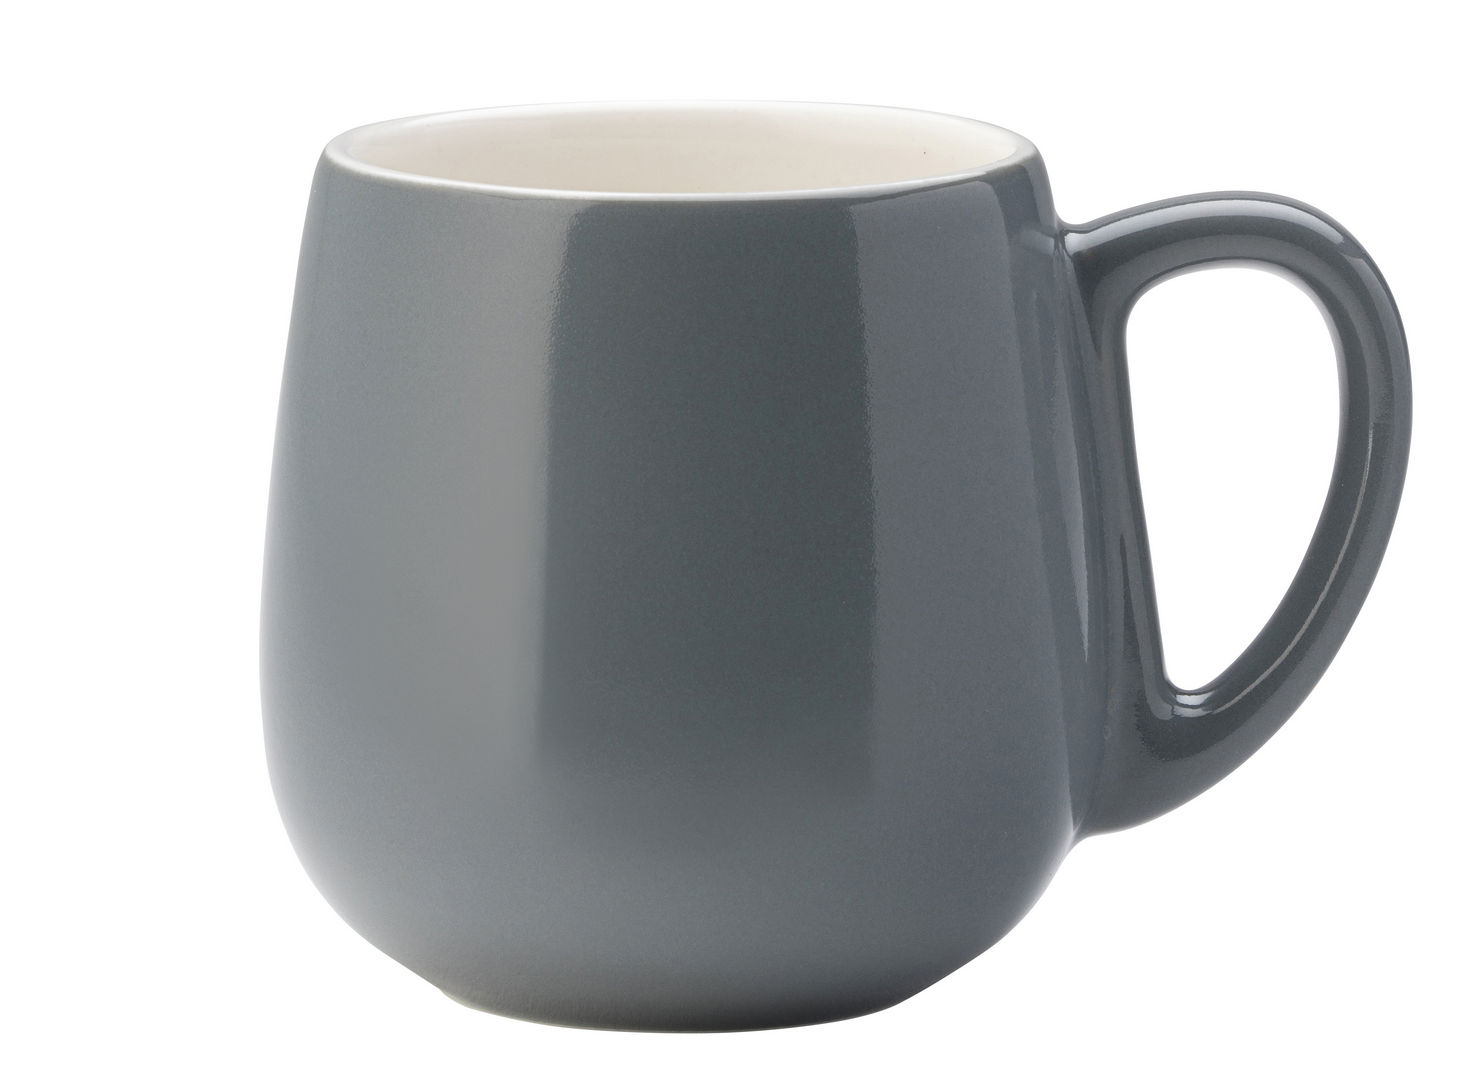 Barista Grey Mug 15oz (42cl) - CT9022-000000-B01006 (Pack of 6)